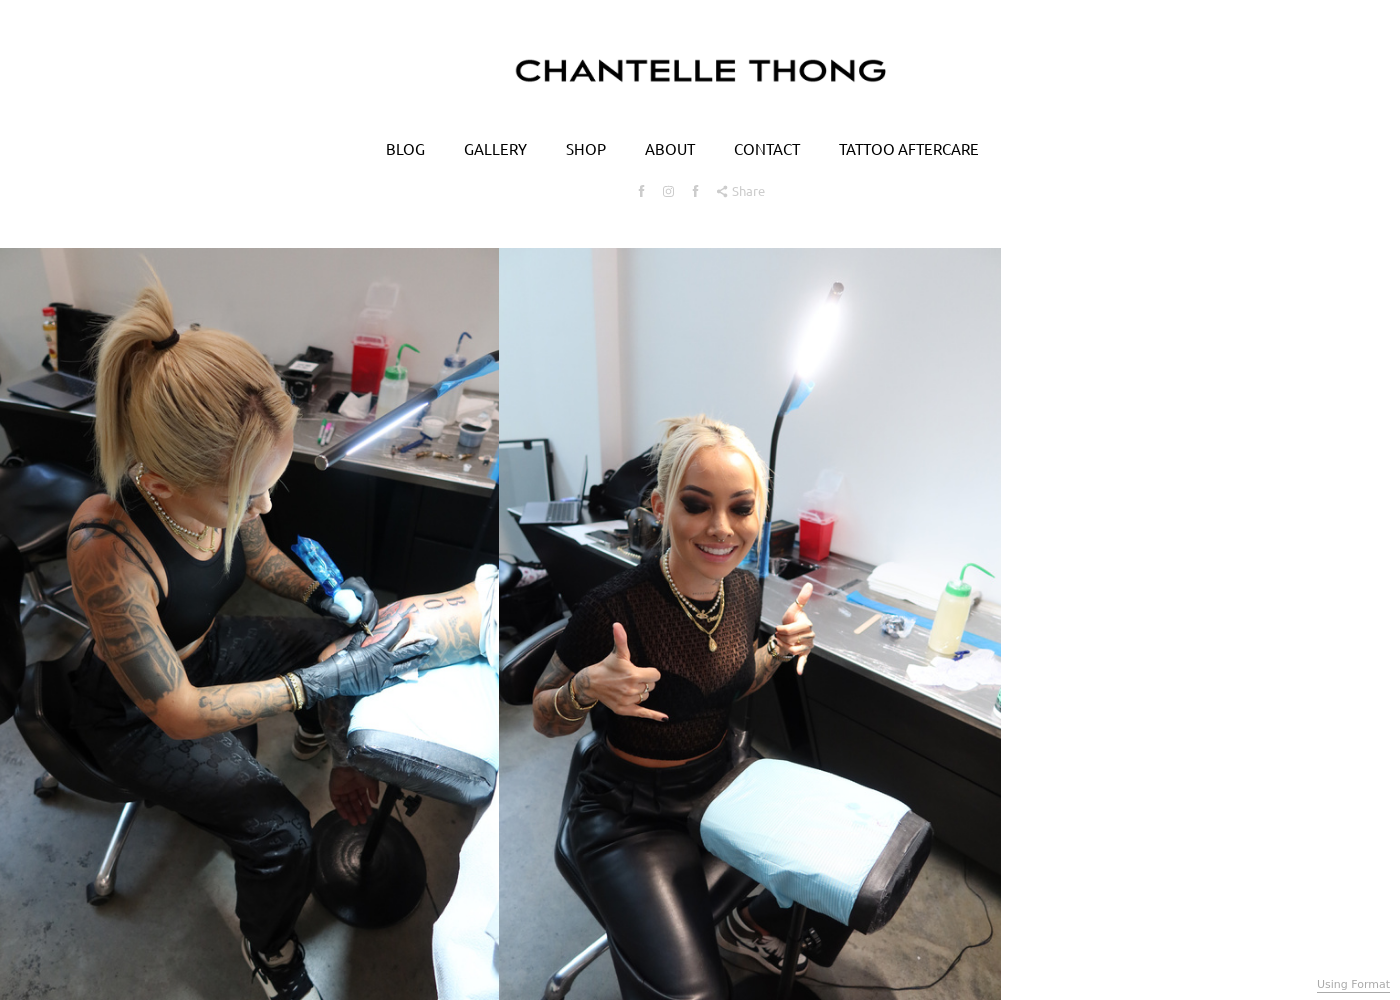 CONTACT - Chantelle Thong Tattoos